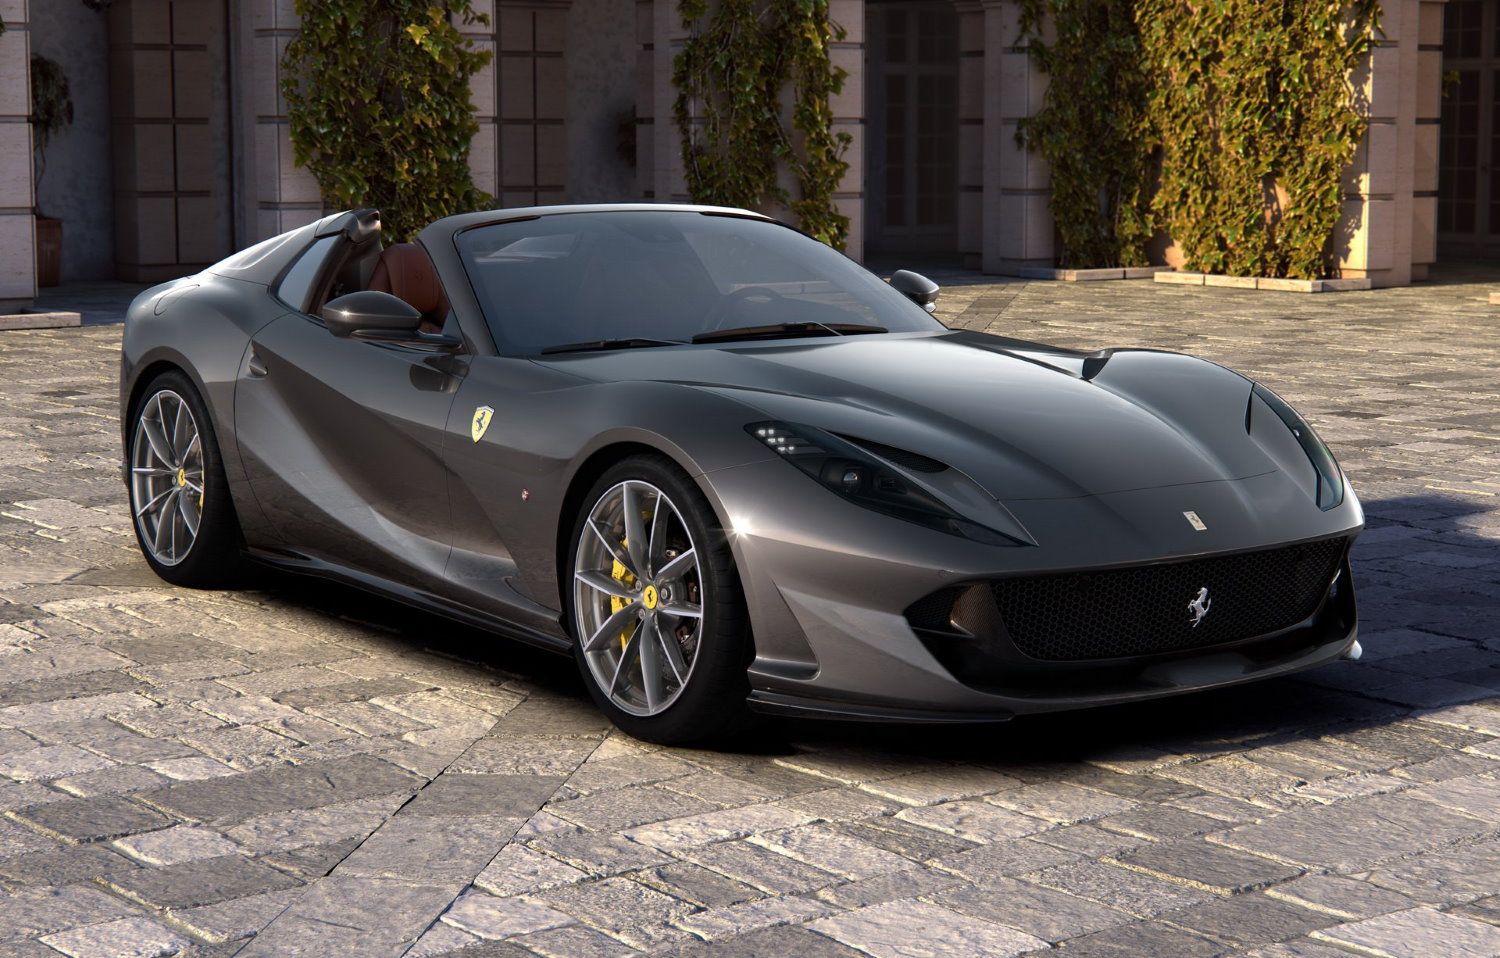 Ferrari Bringing Two New Convertible Models To Frankfurt Motor Show